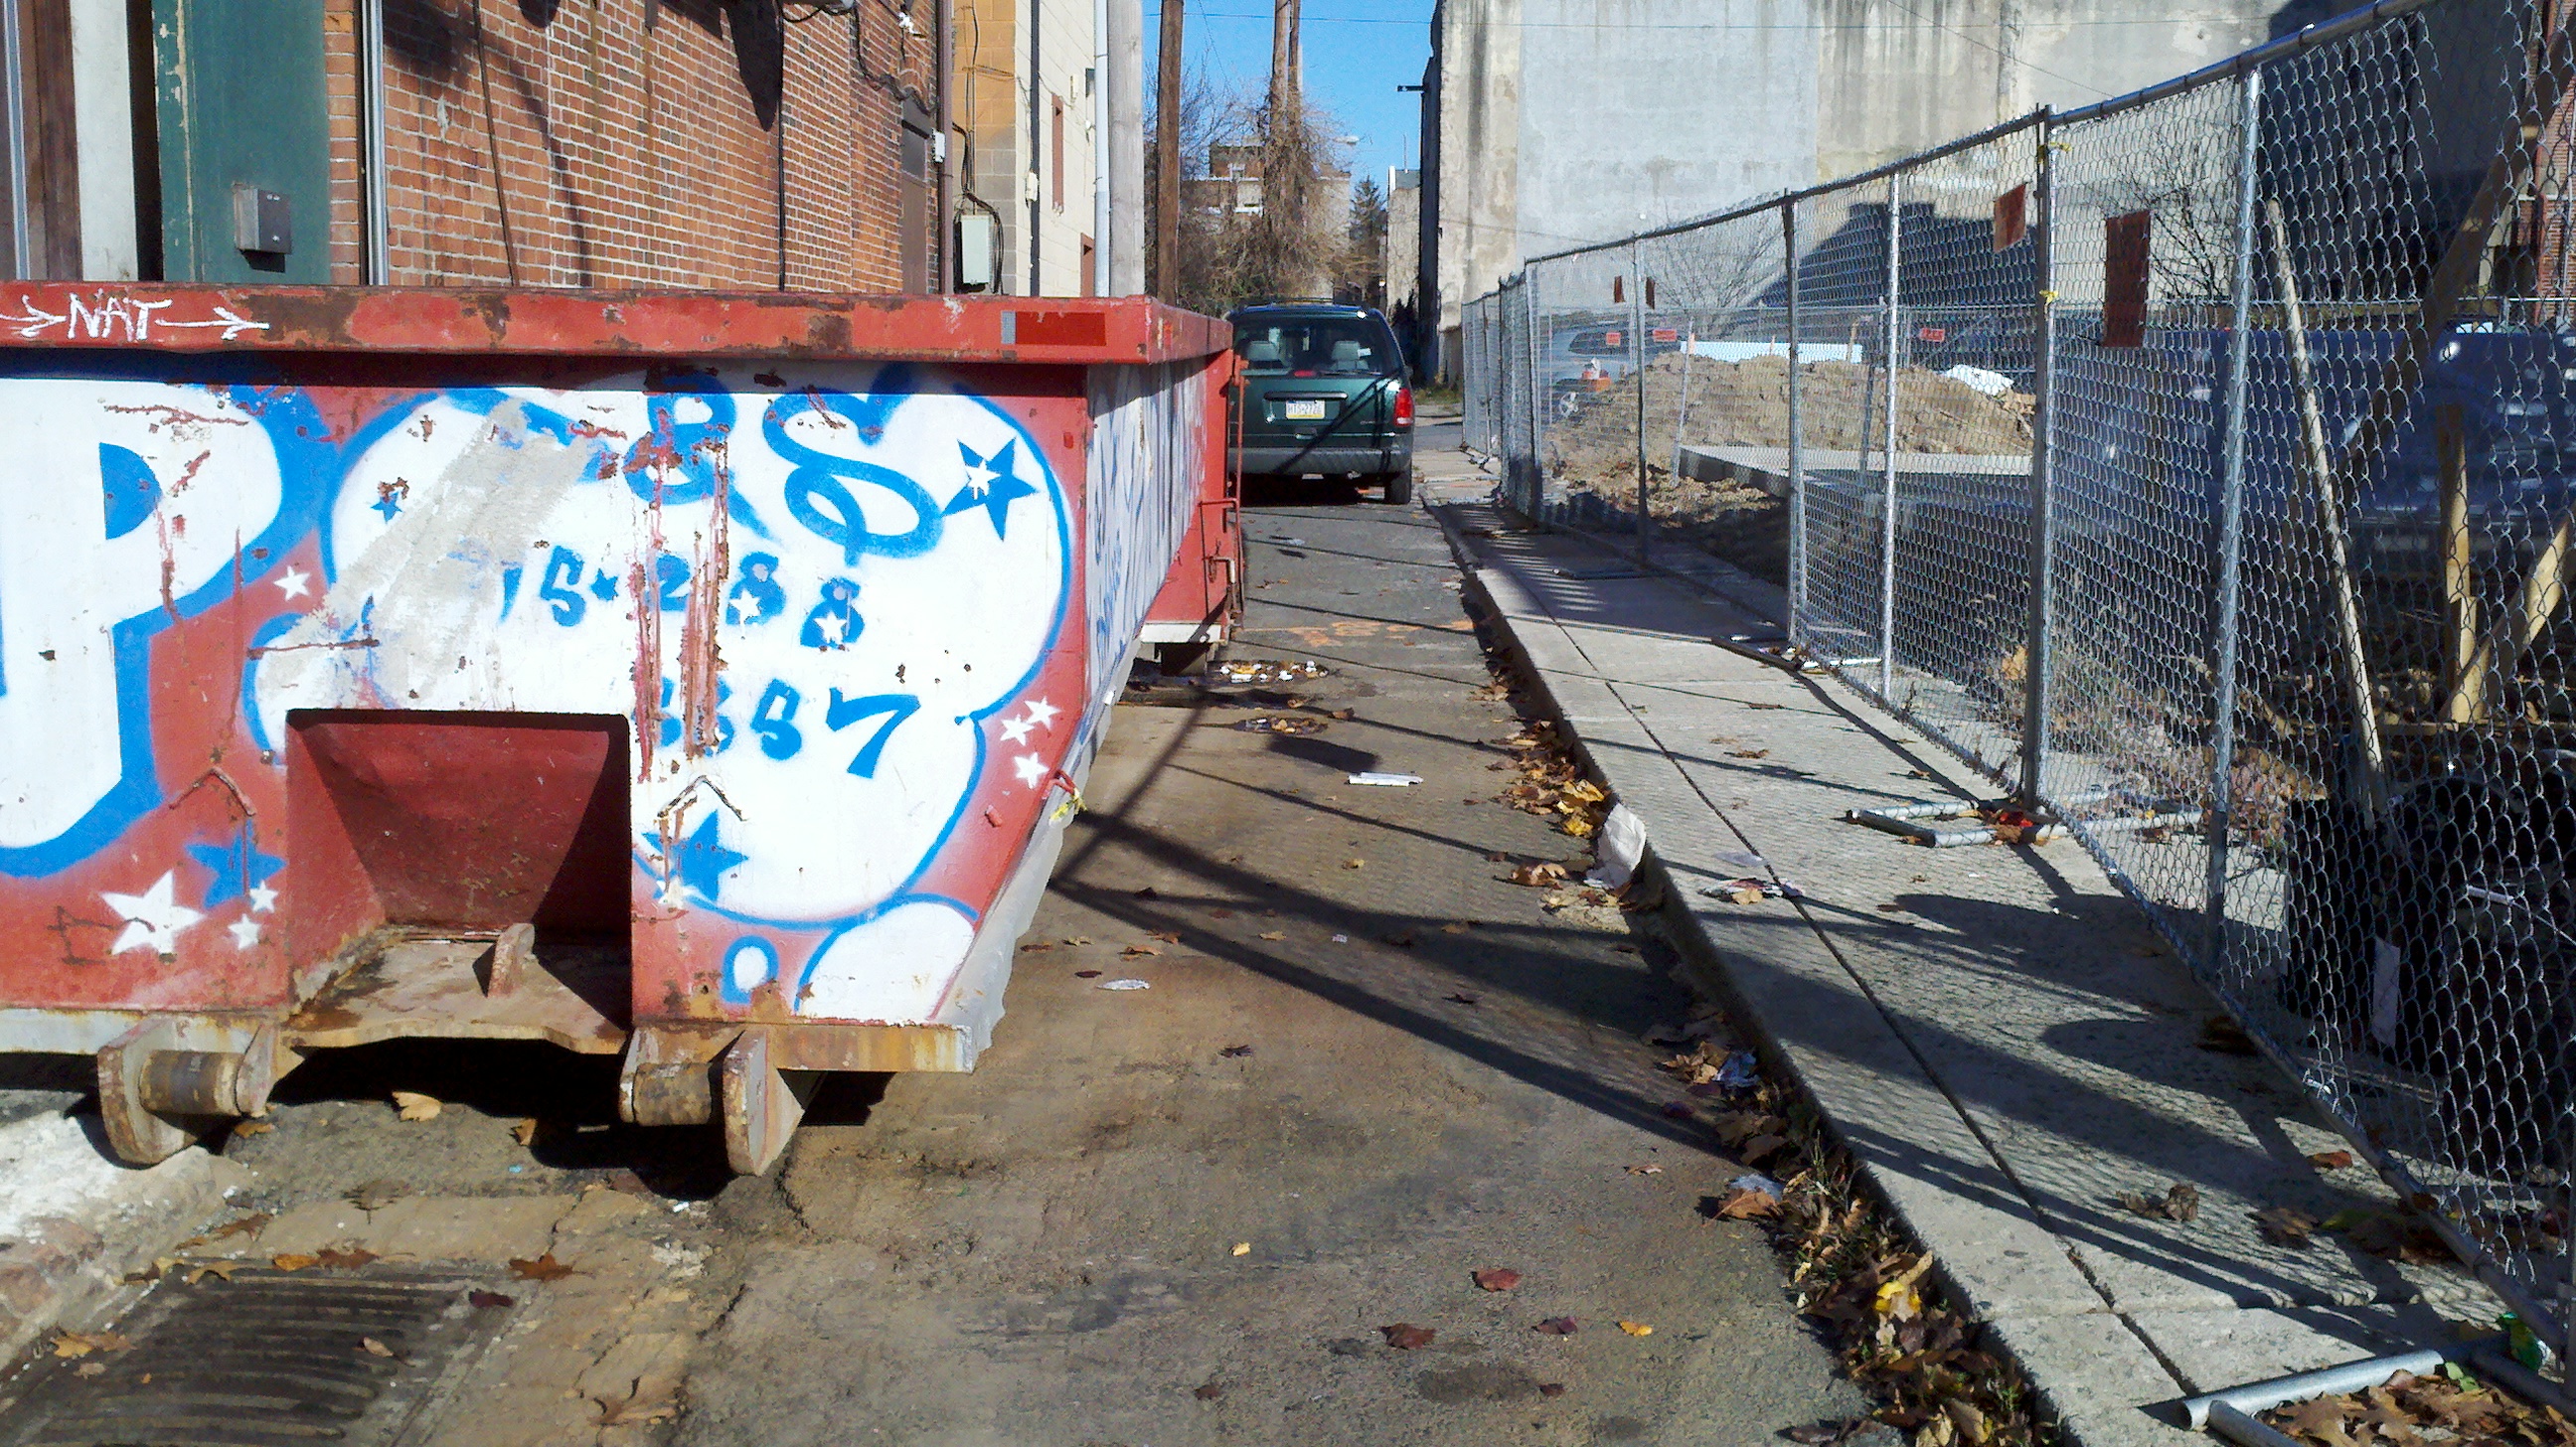 This dumpster sits near Finnegan's Wake on  Bodine Street